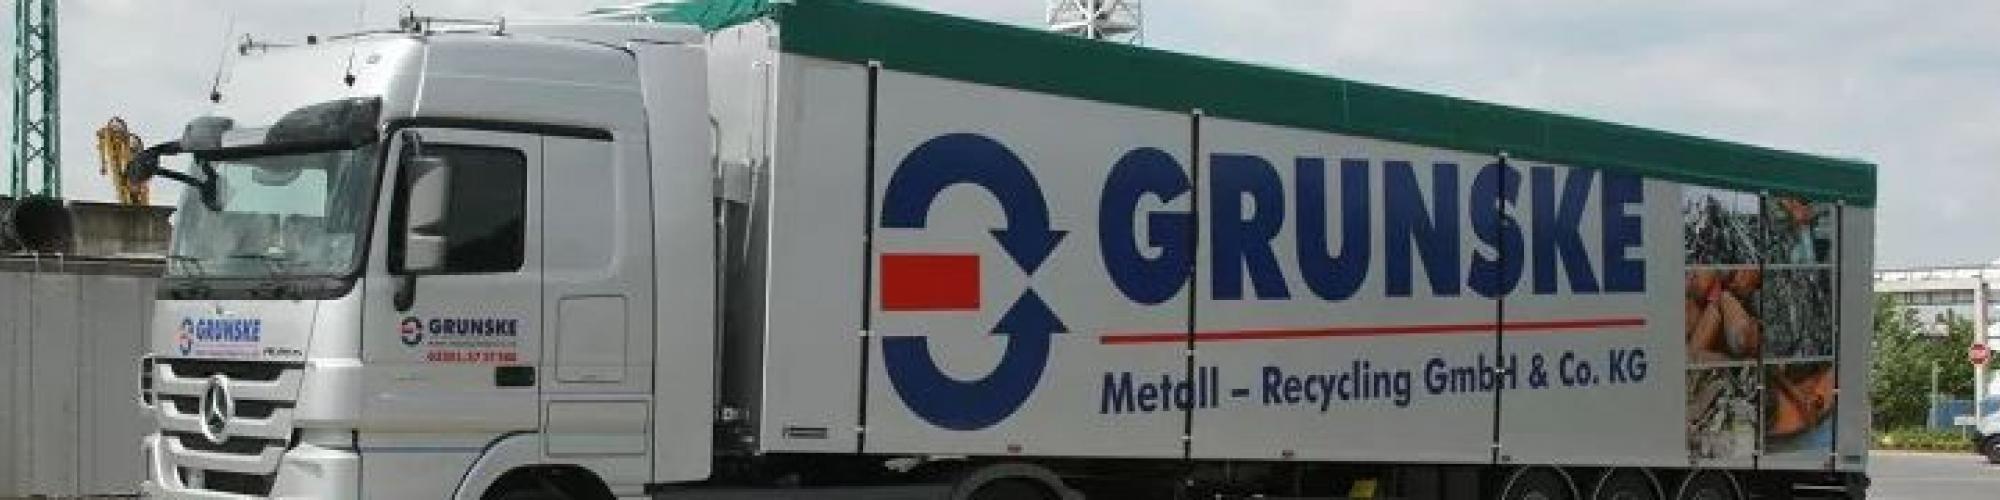 GRUNSKE Metall – Recycling GmbH & Co. KG